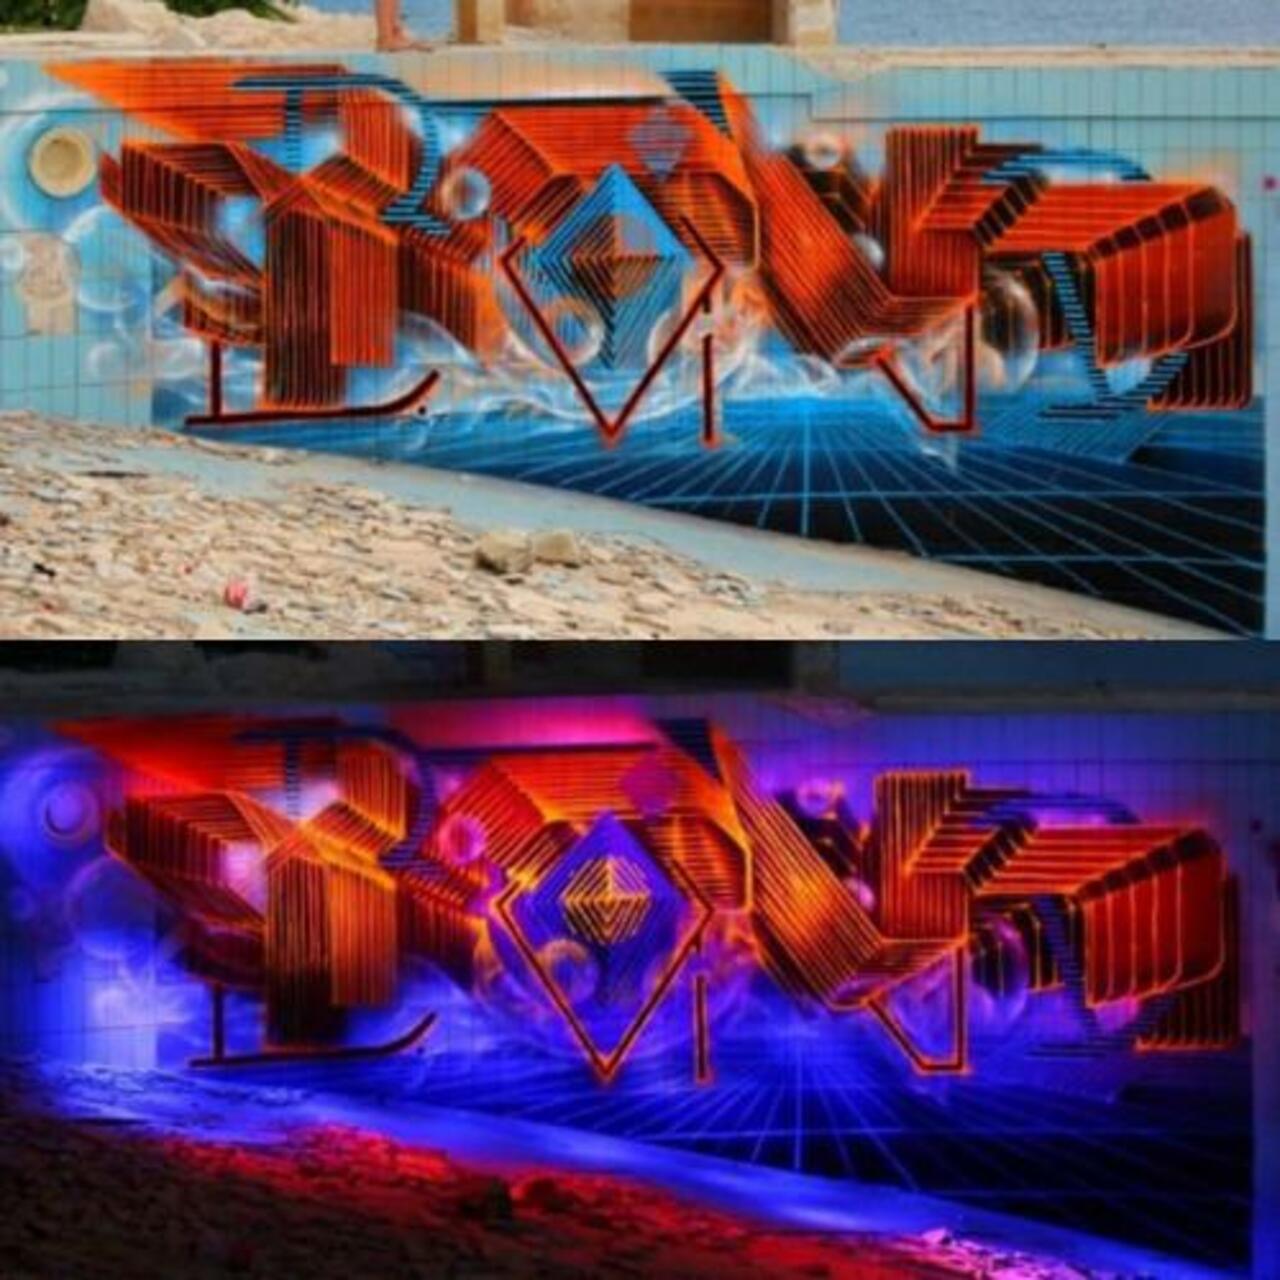 Glow in the dark #streetart work by innovative German #graffiti artist #BondTruluv.

http://wp.me/p2dpFM-38F http://t.co/9dnHiZy1XR